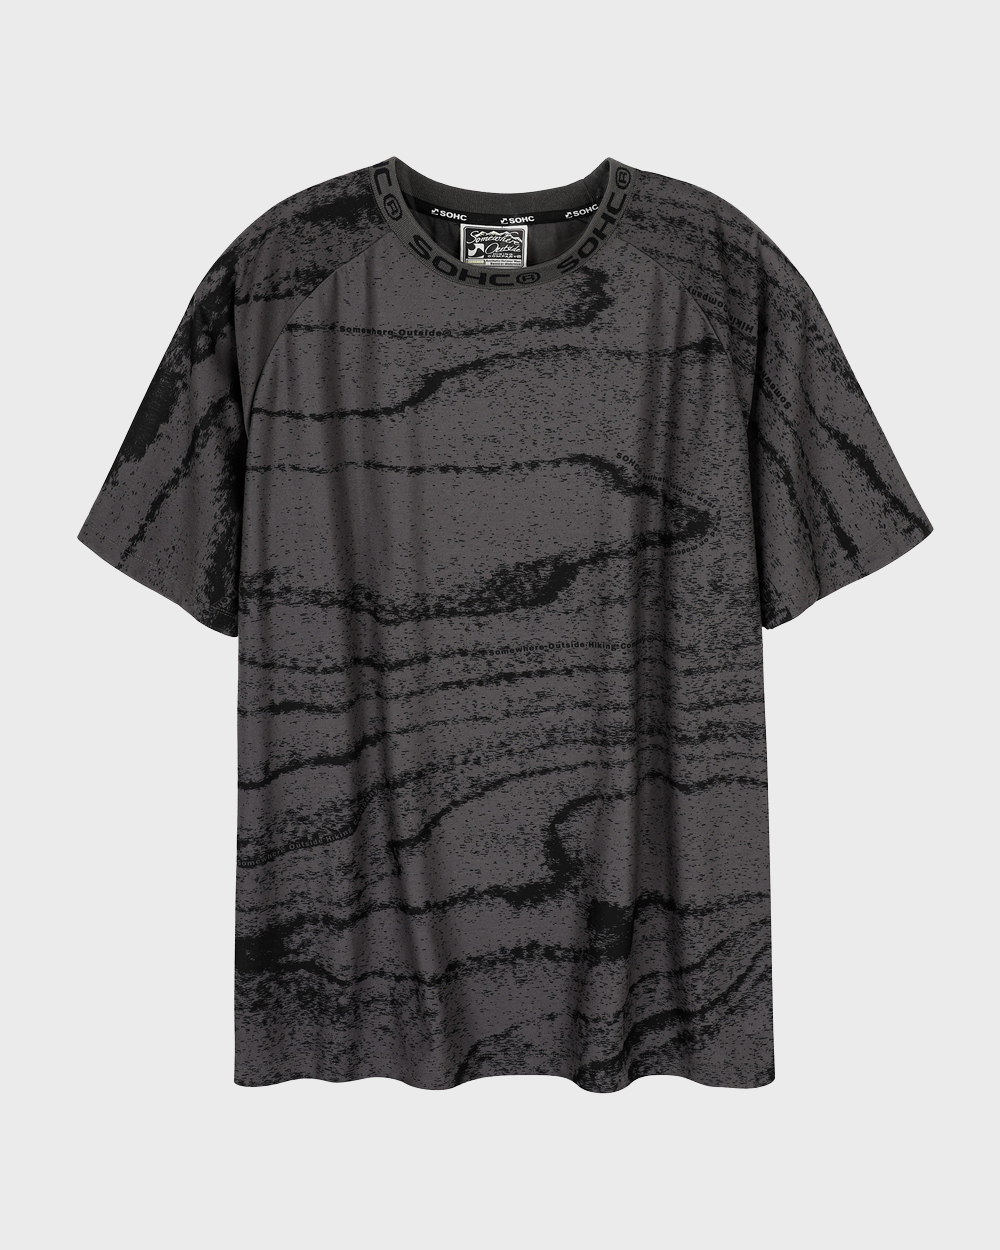 Oak Cross-section Graphic T Shirt (Charcoal)